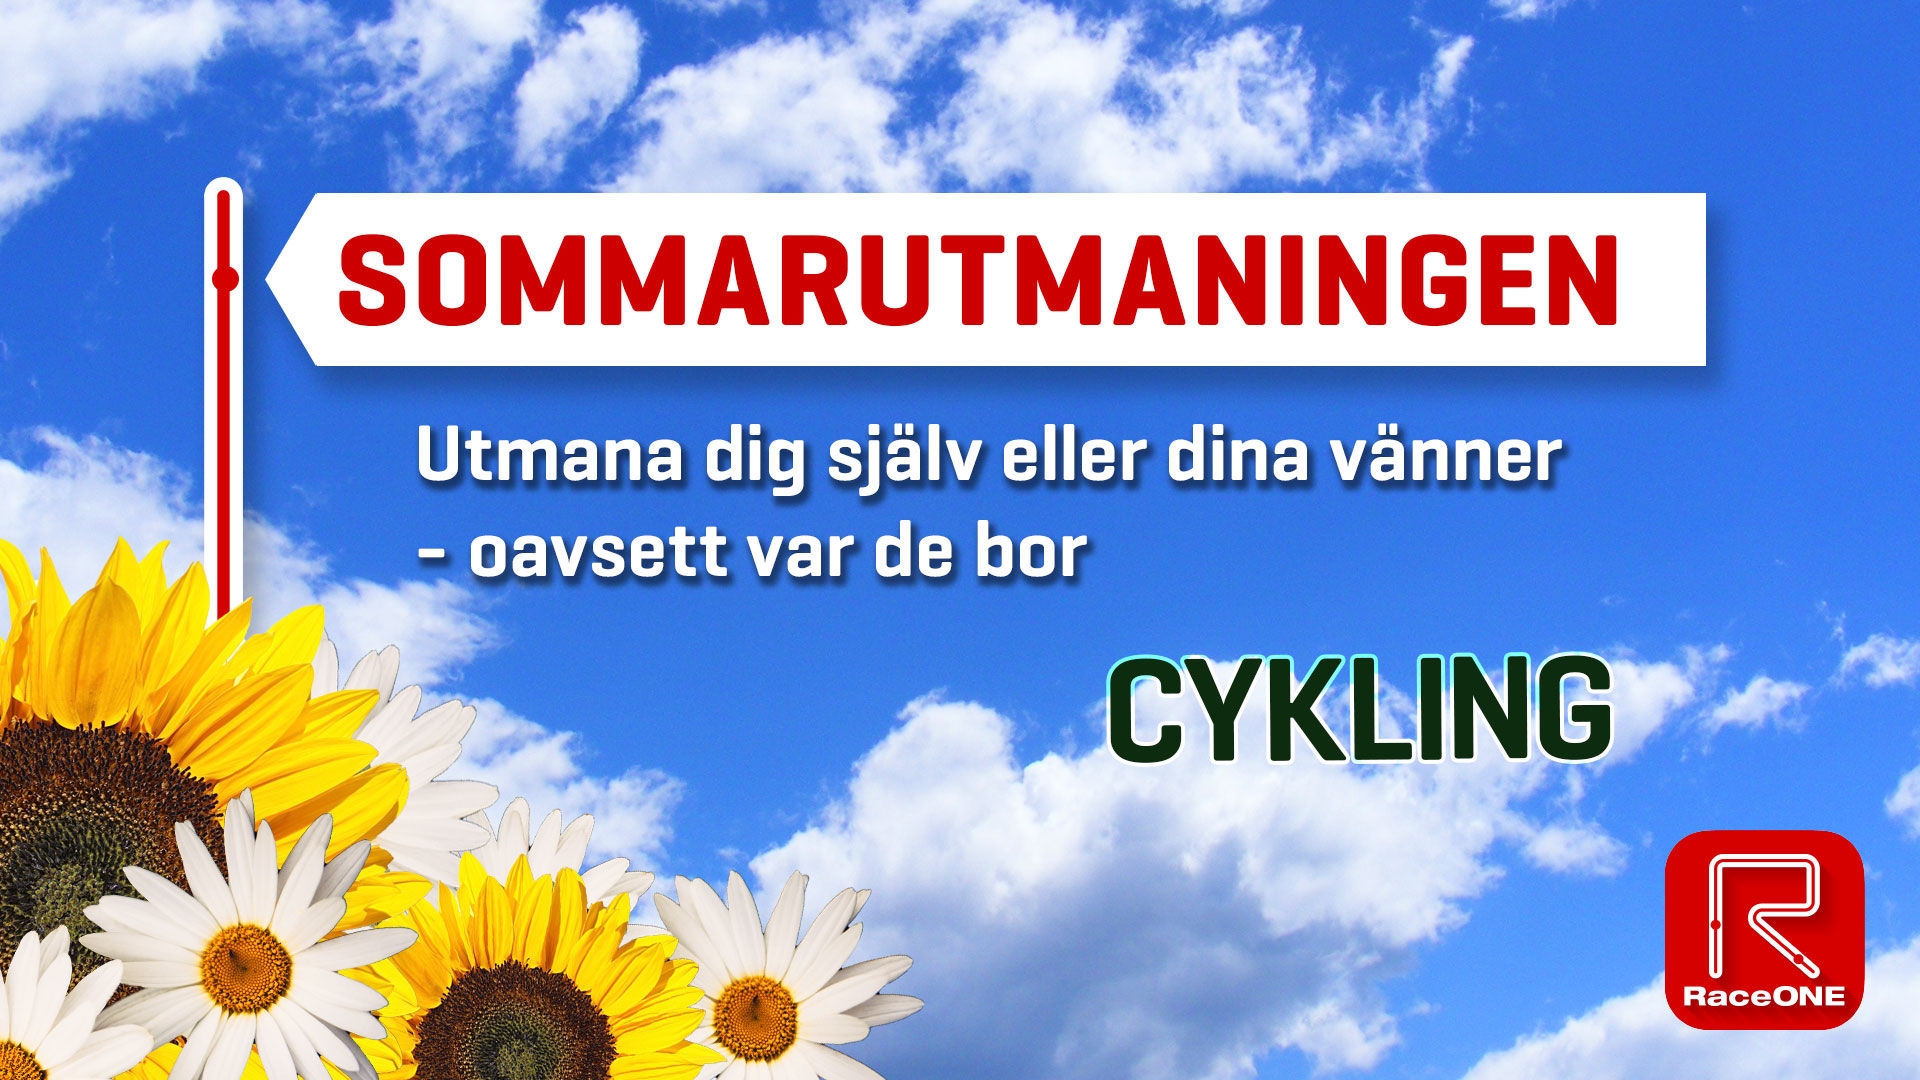 RaceONE Sommarutmaning - Cykling - 5km - Augusti 2020